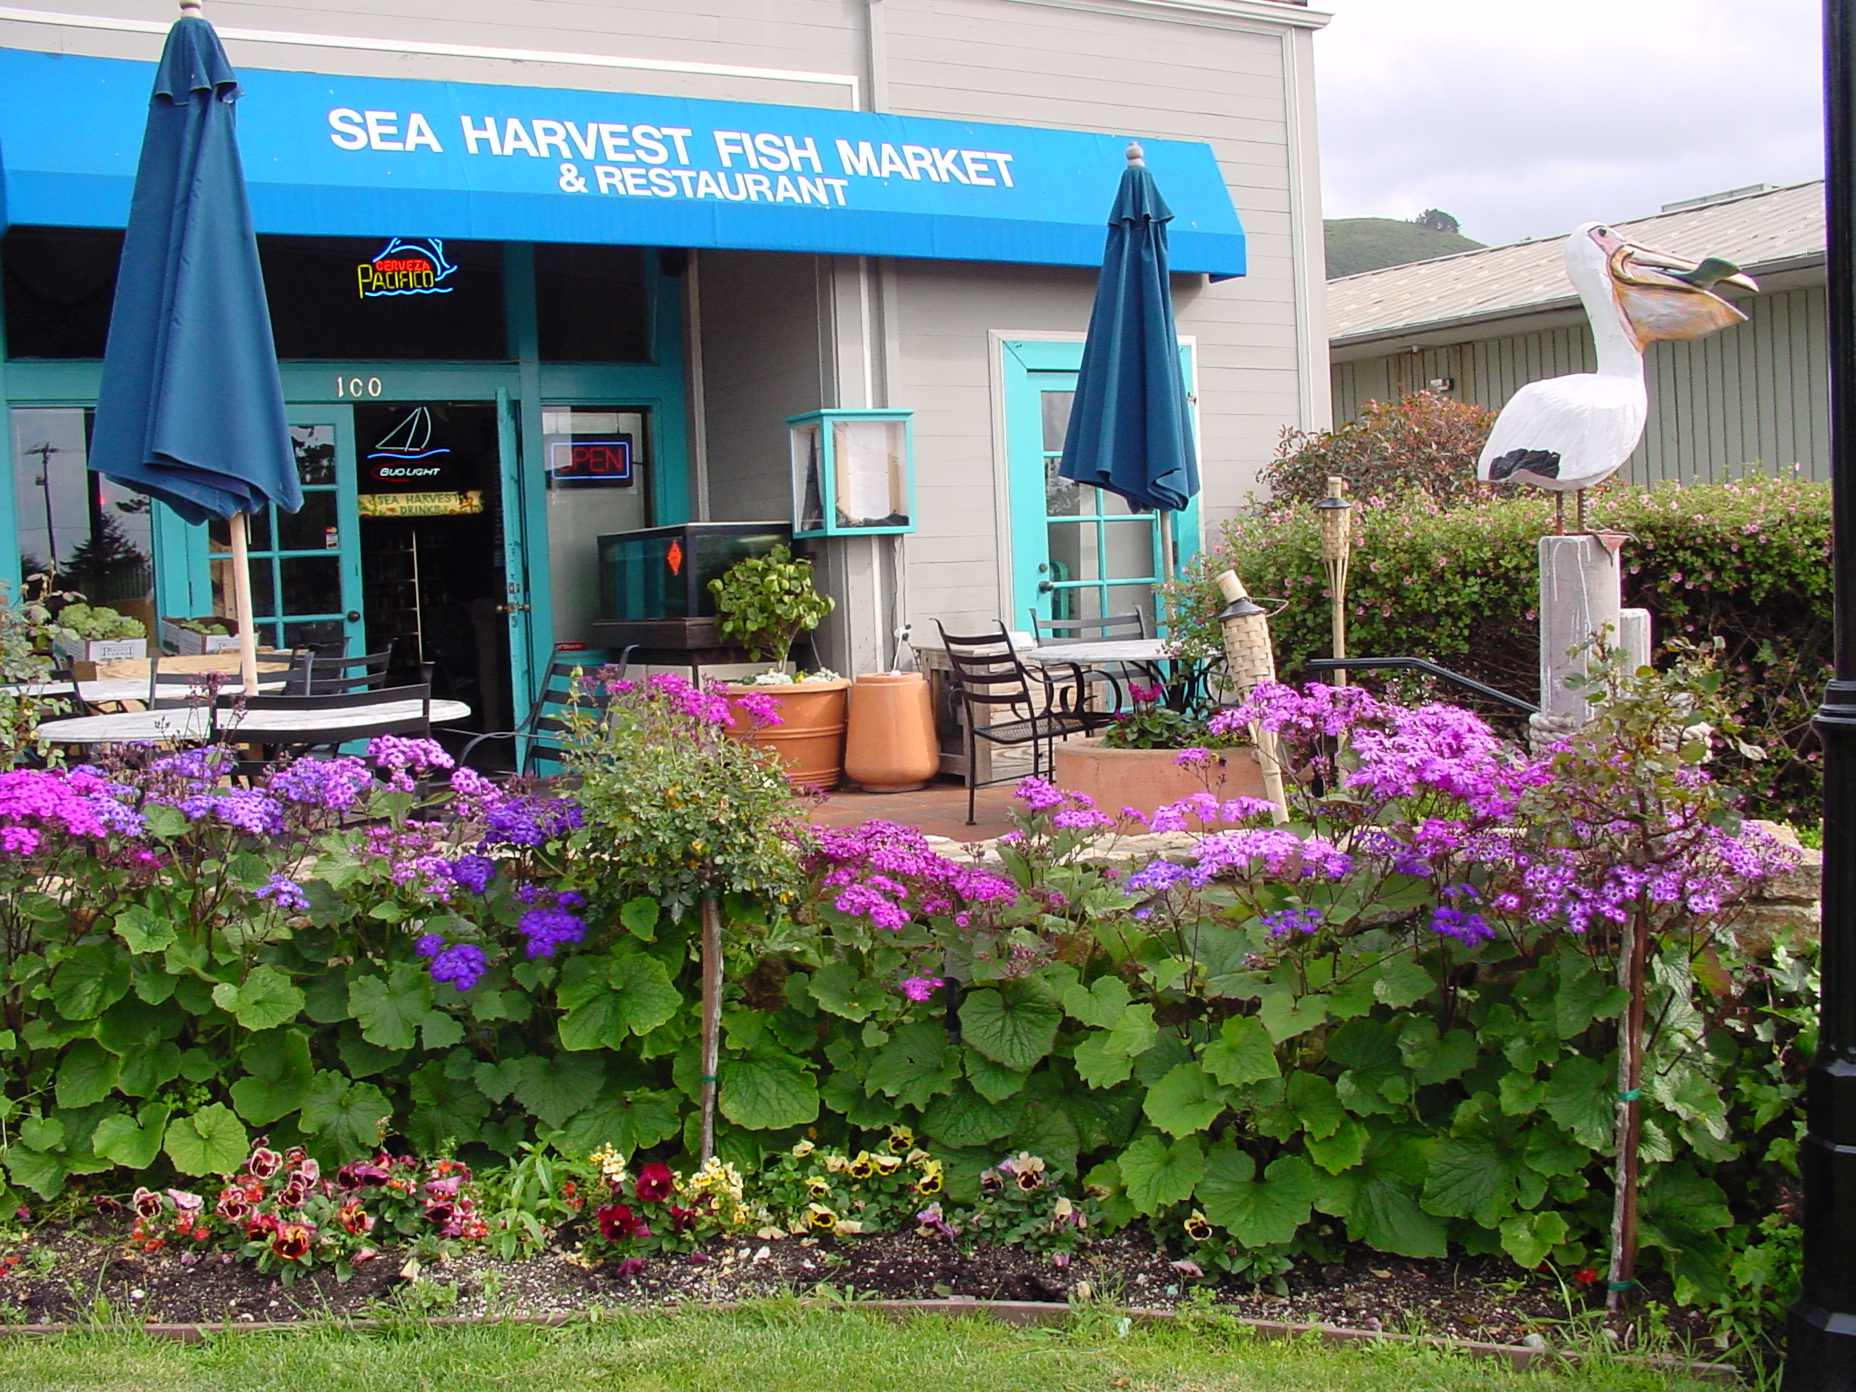 exterior of Sea harvest fish market